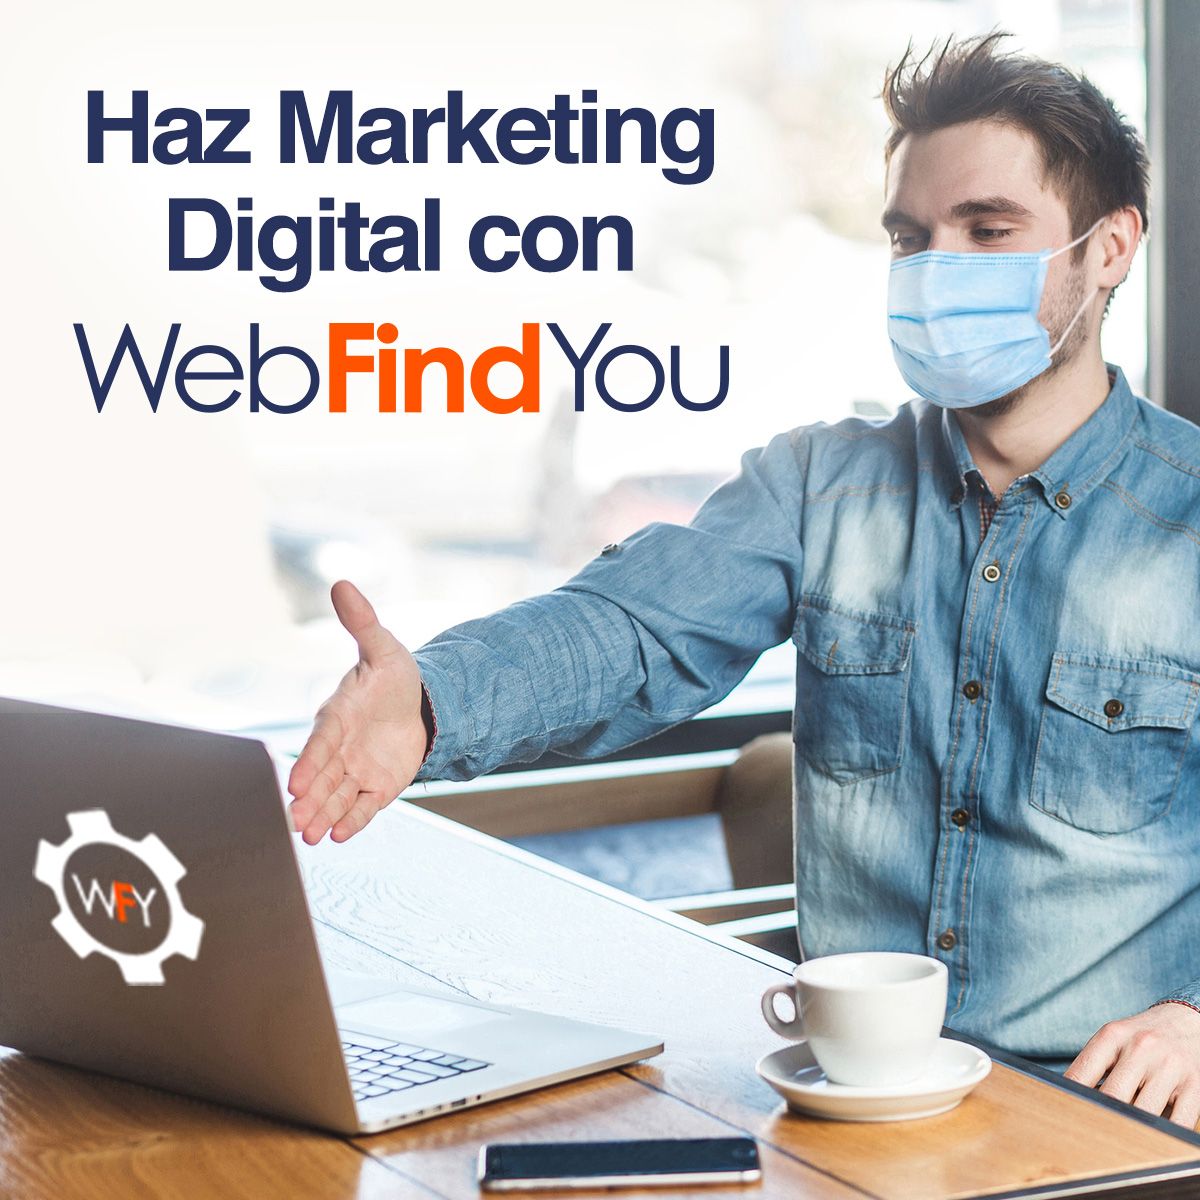 Haz Marketing Digital con WebFindYou